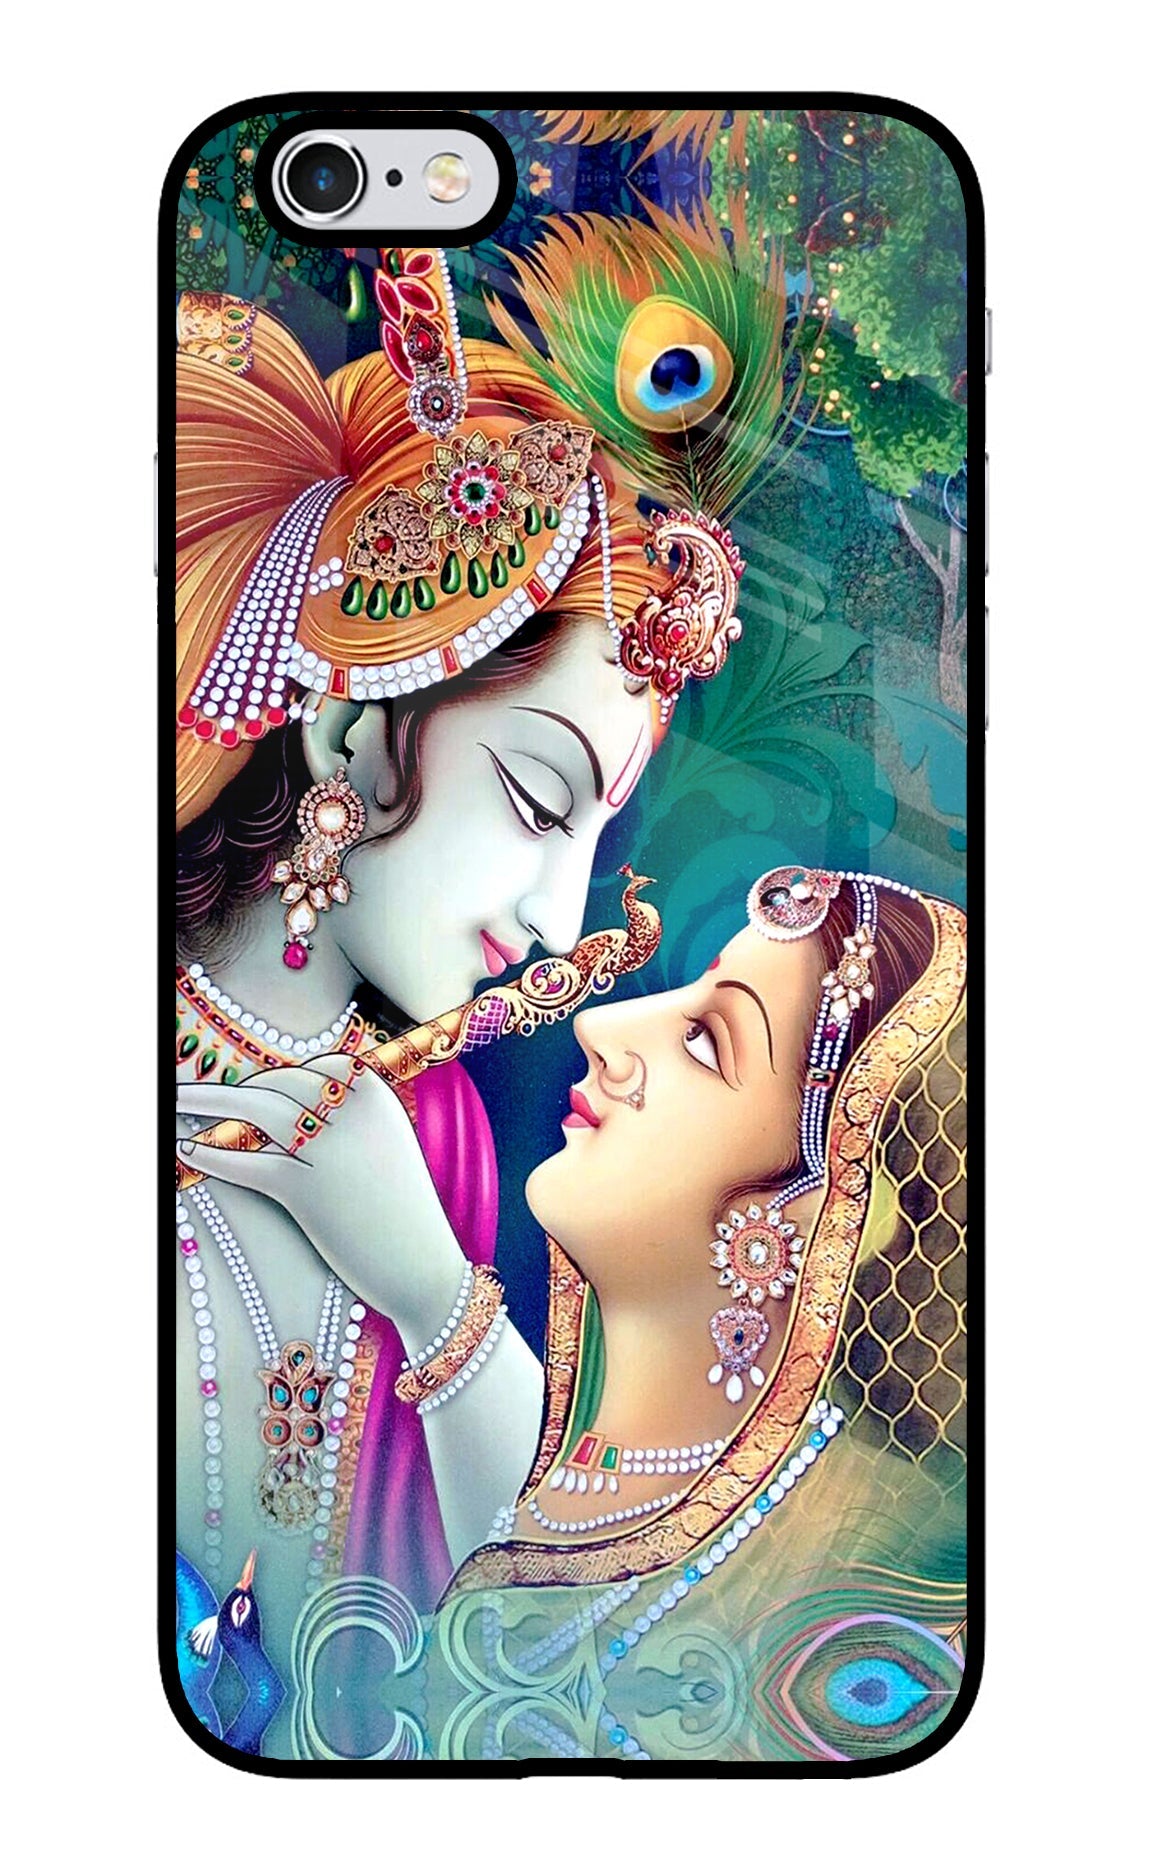 Lord Radha Krishna iPhone 6/6s Glass Case